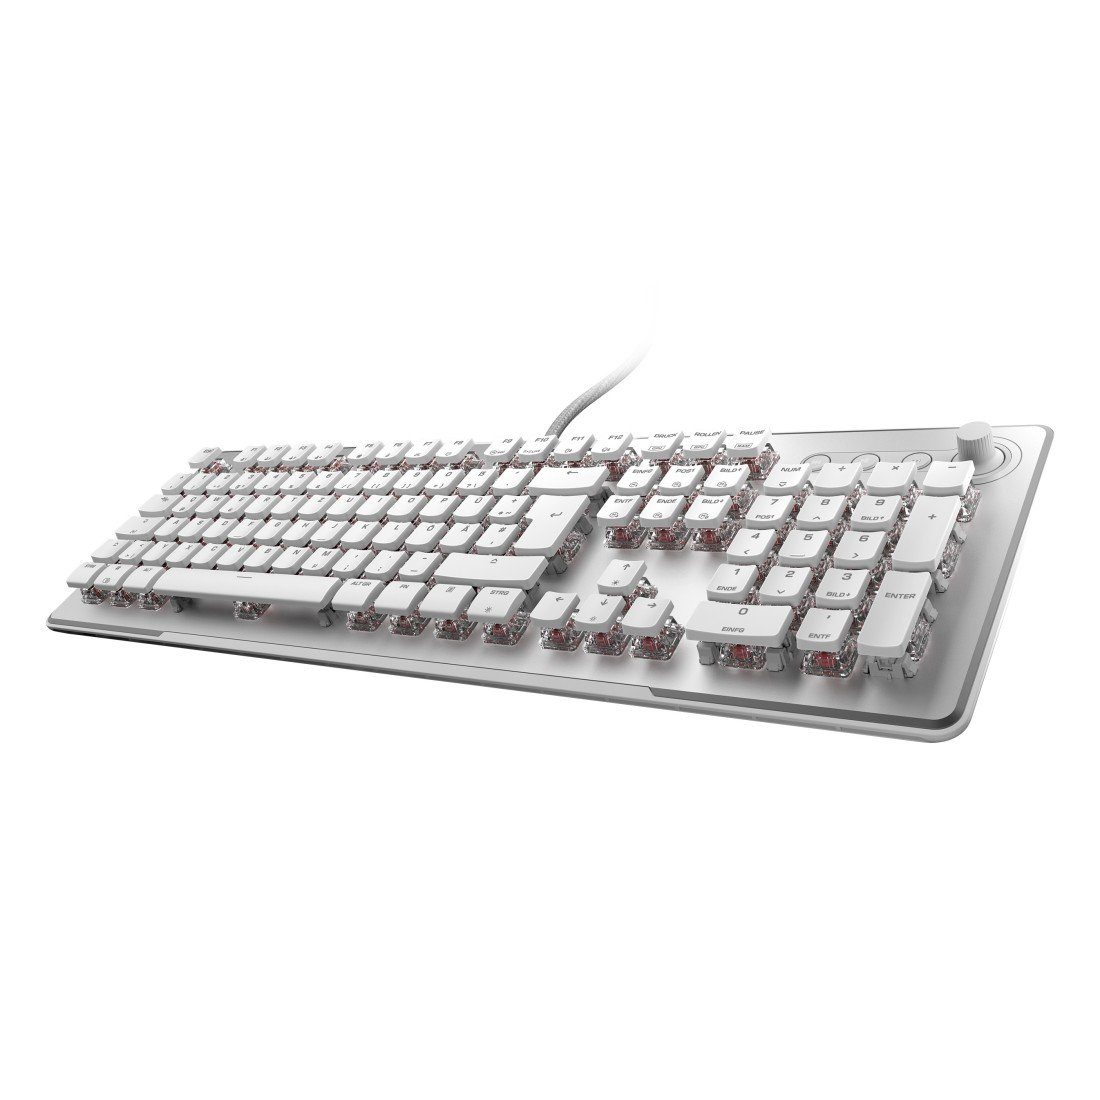 ROCCAT Gaming-Tastatur "Vulcan Gaming-Tastatur lineare Tasten Max", II weiß mechanische